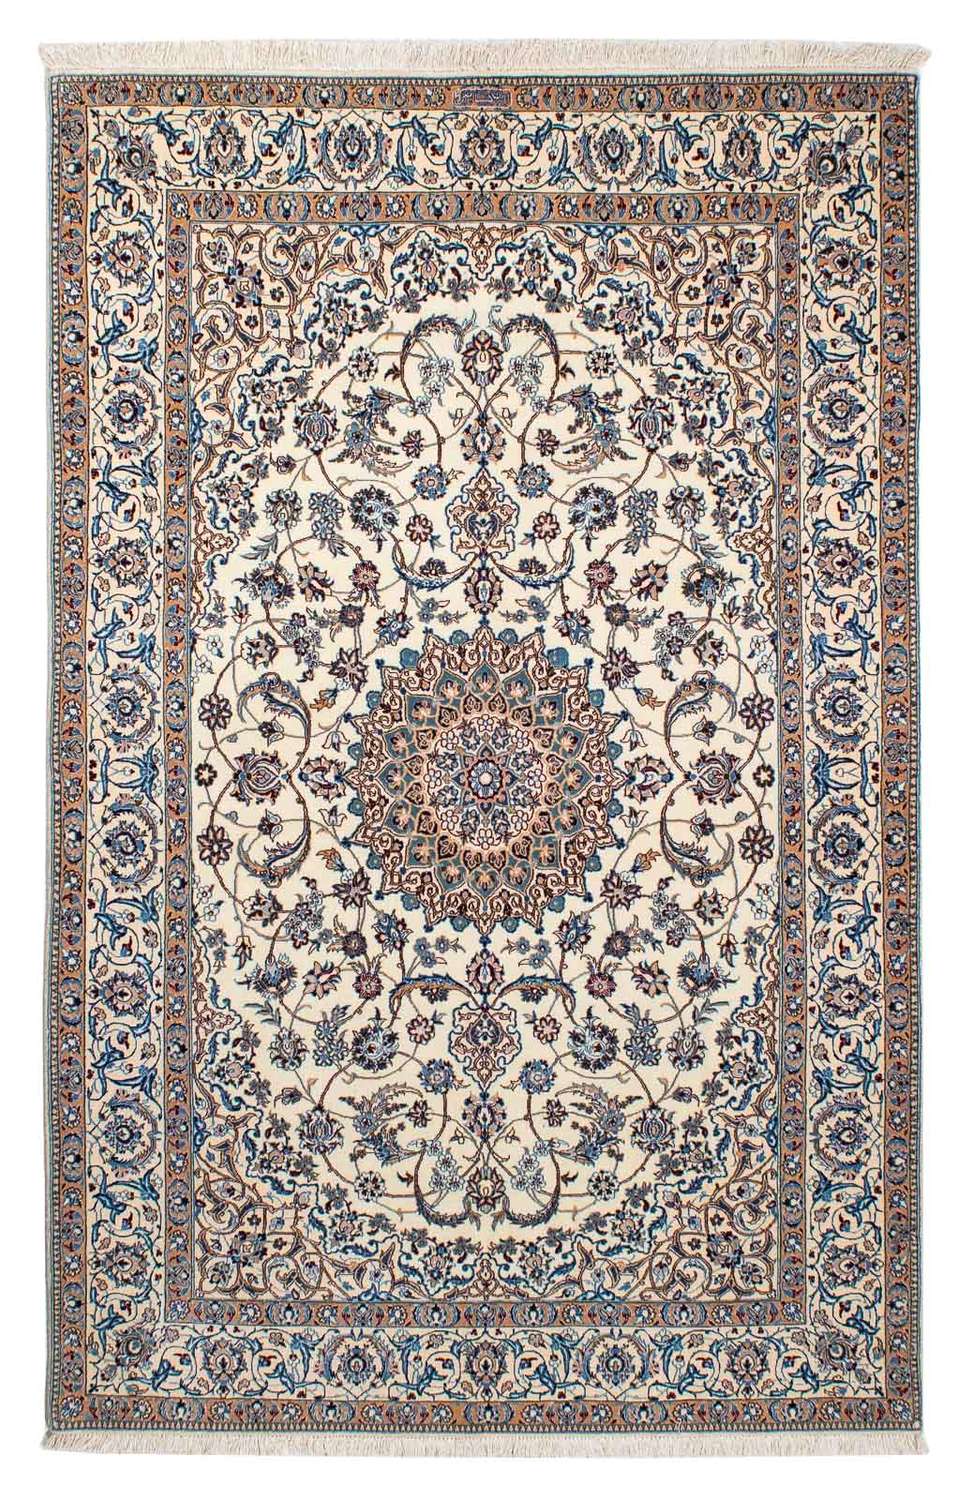 Tapis persan - Nain - Premium - 194 x 128 cm - beige